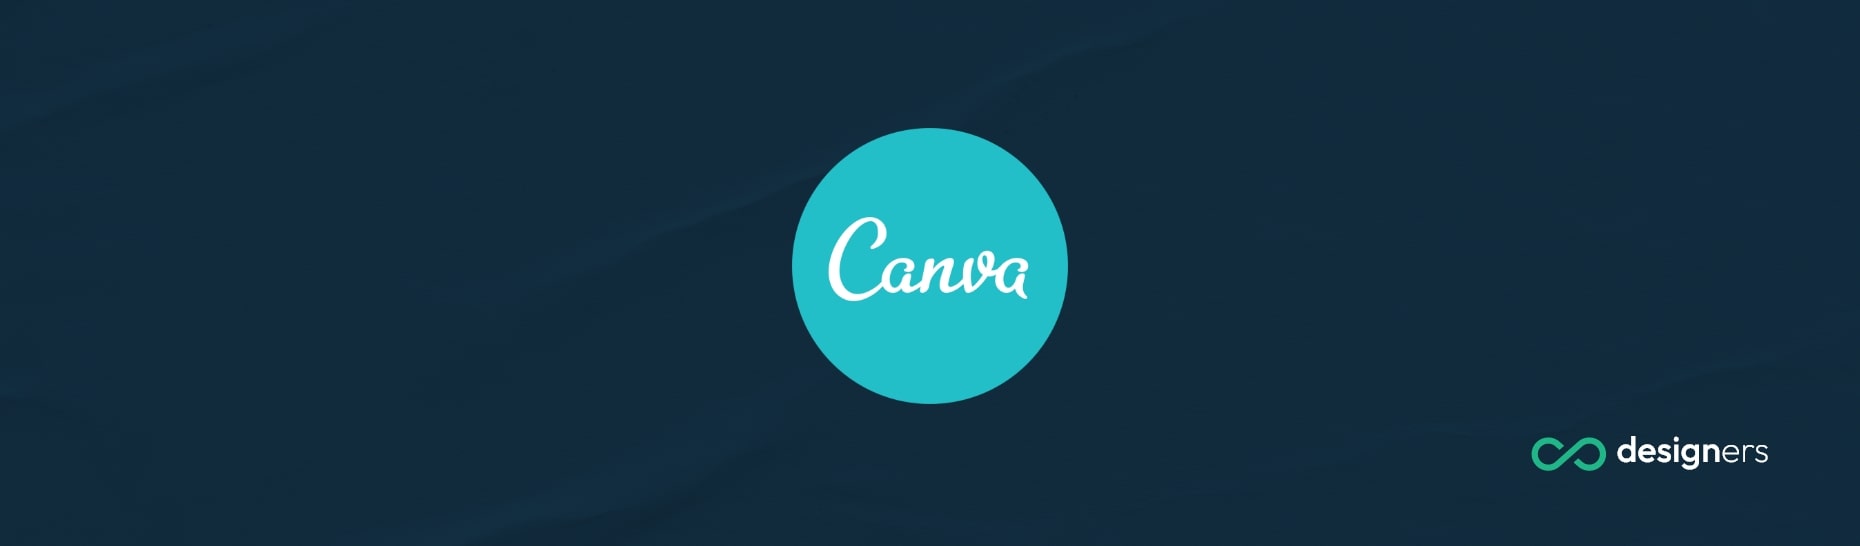 How Did Canva Begin?